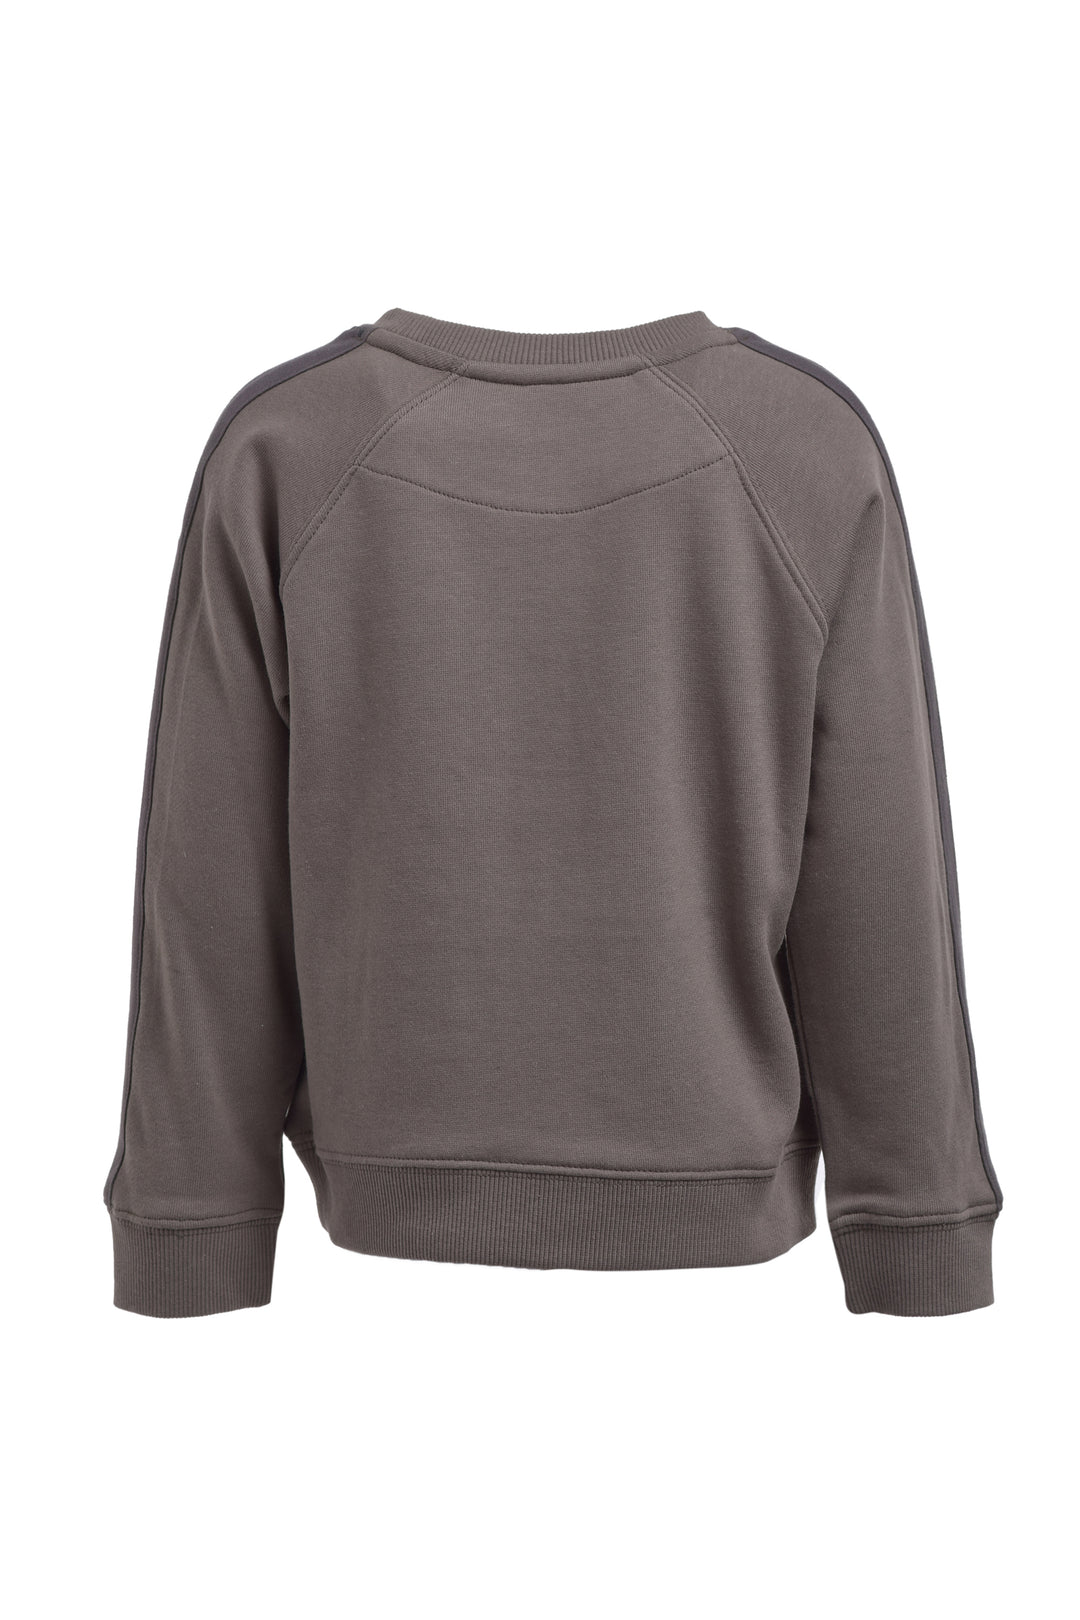 French Cotton Crewneck Sweater [Junior]